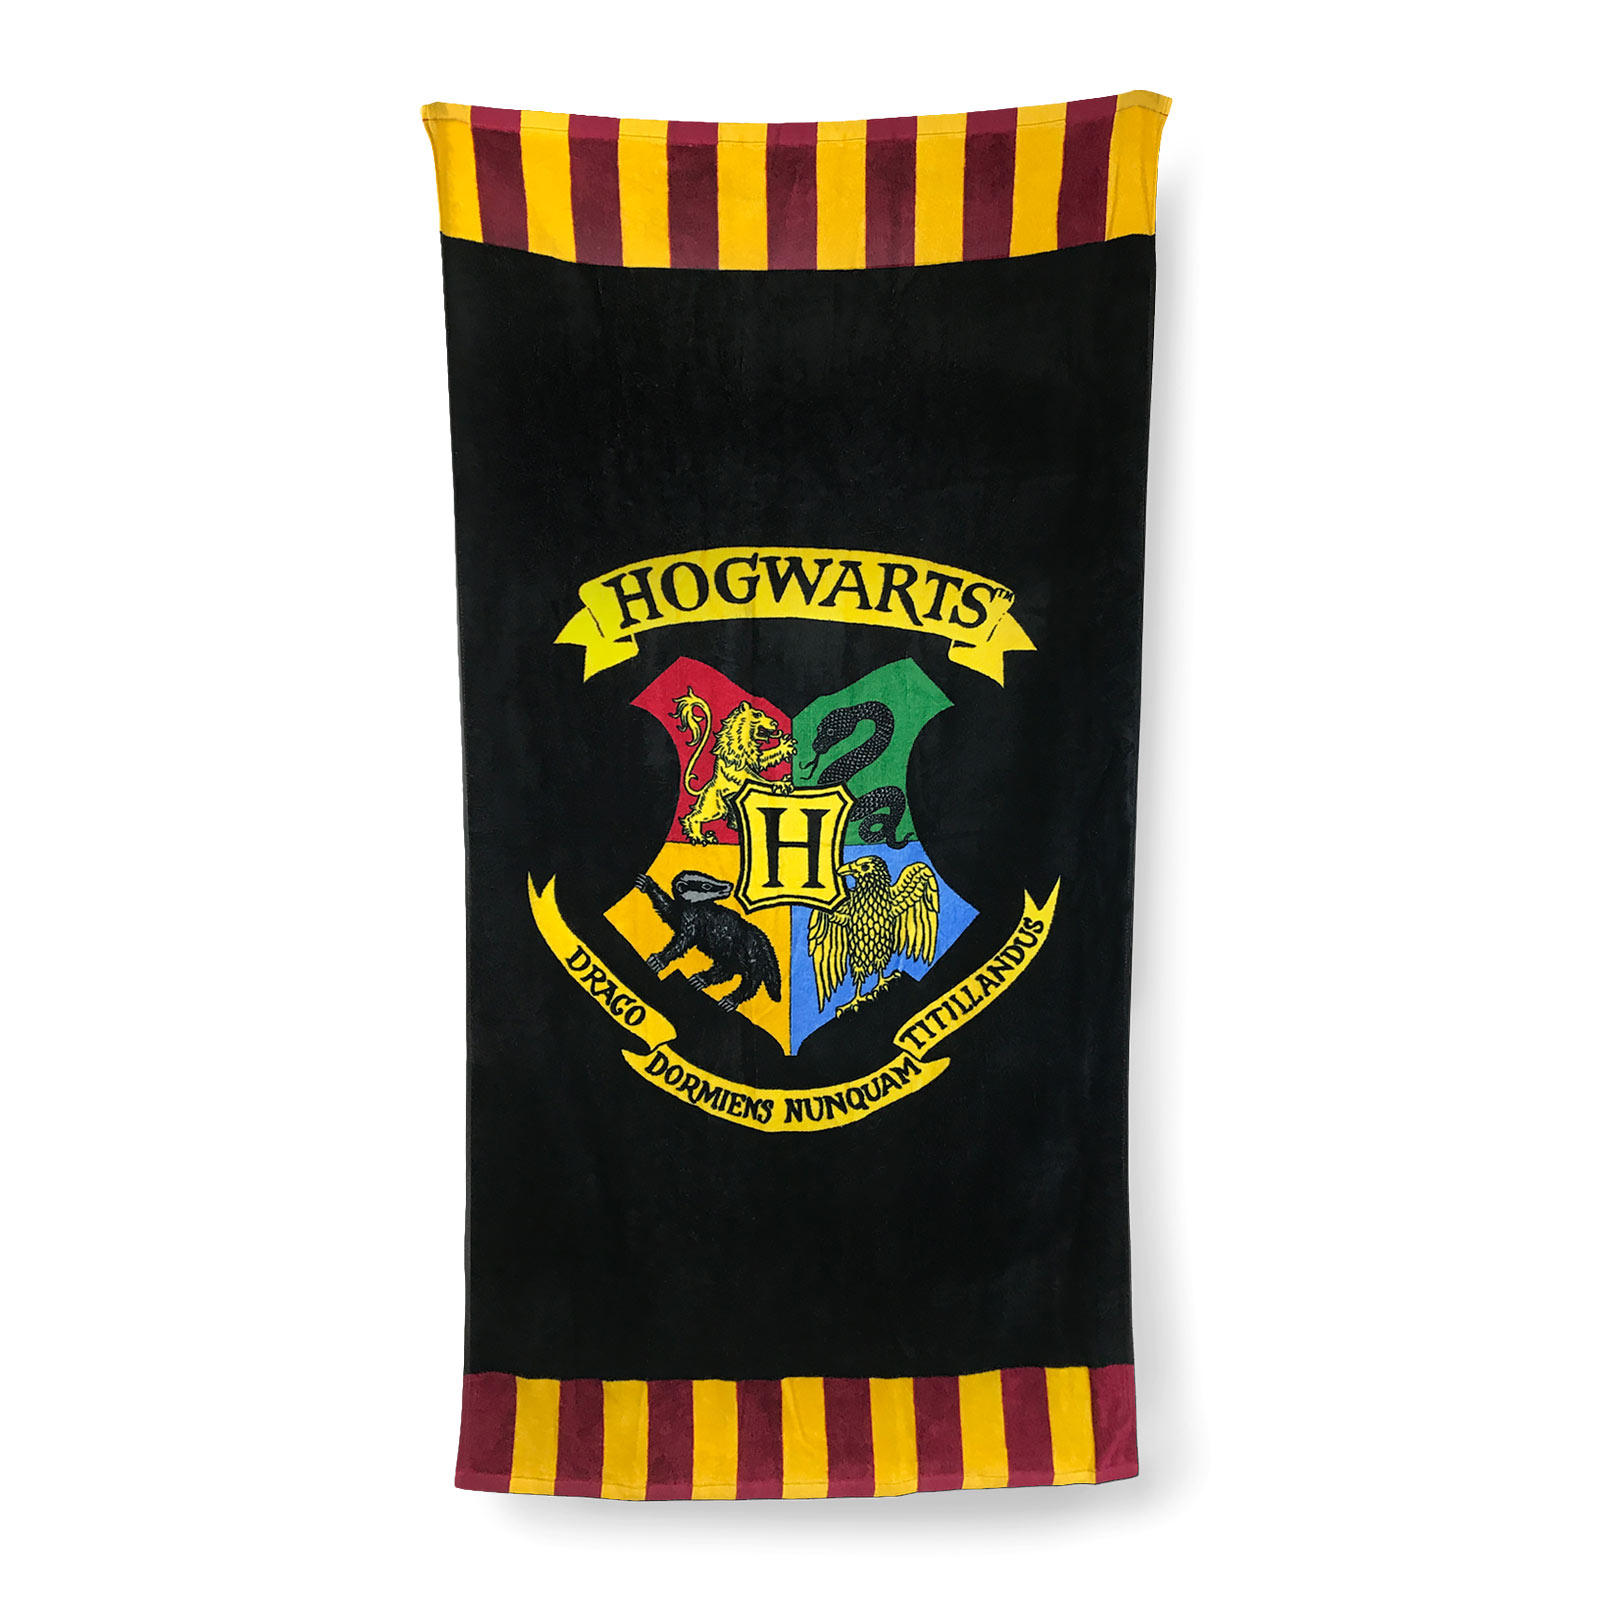 Harry Potter - Hogwarts Wappen Badetuch